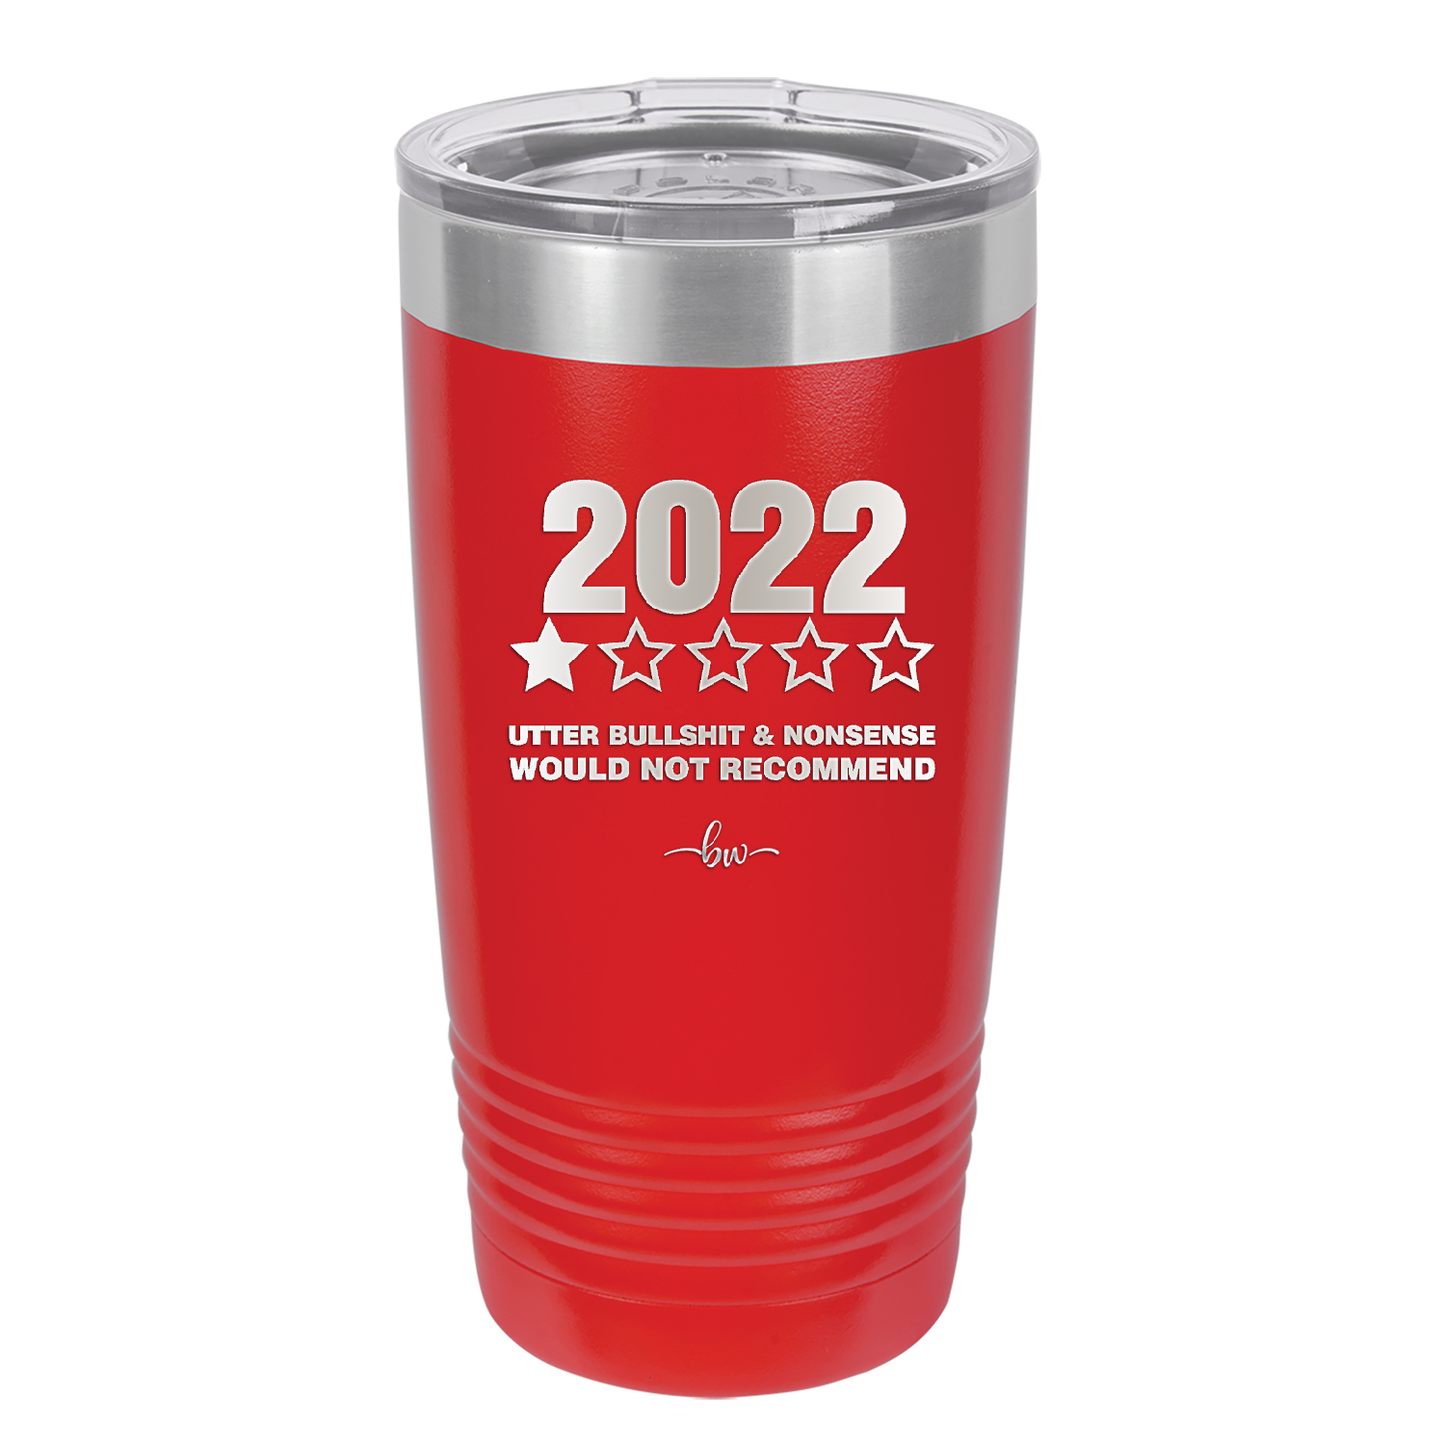 20 oz  2022 utter bullshitt and nonsense would not recommend - red